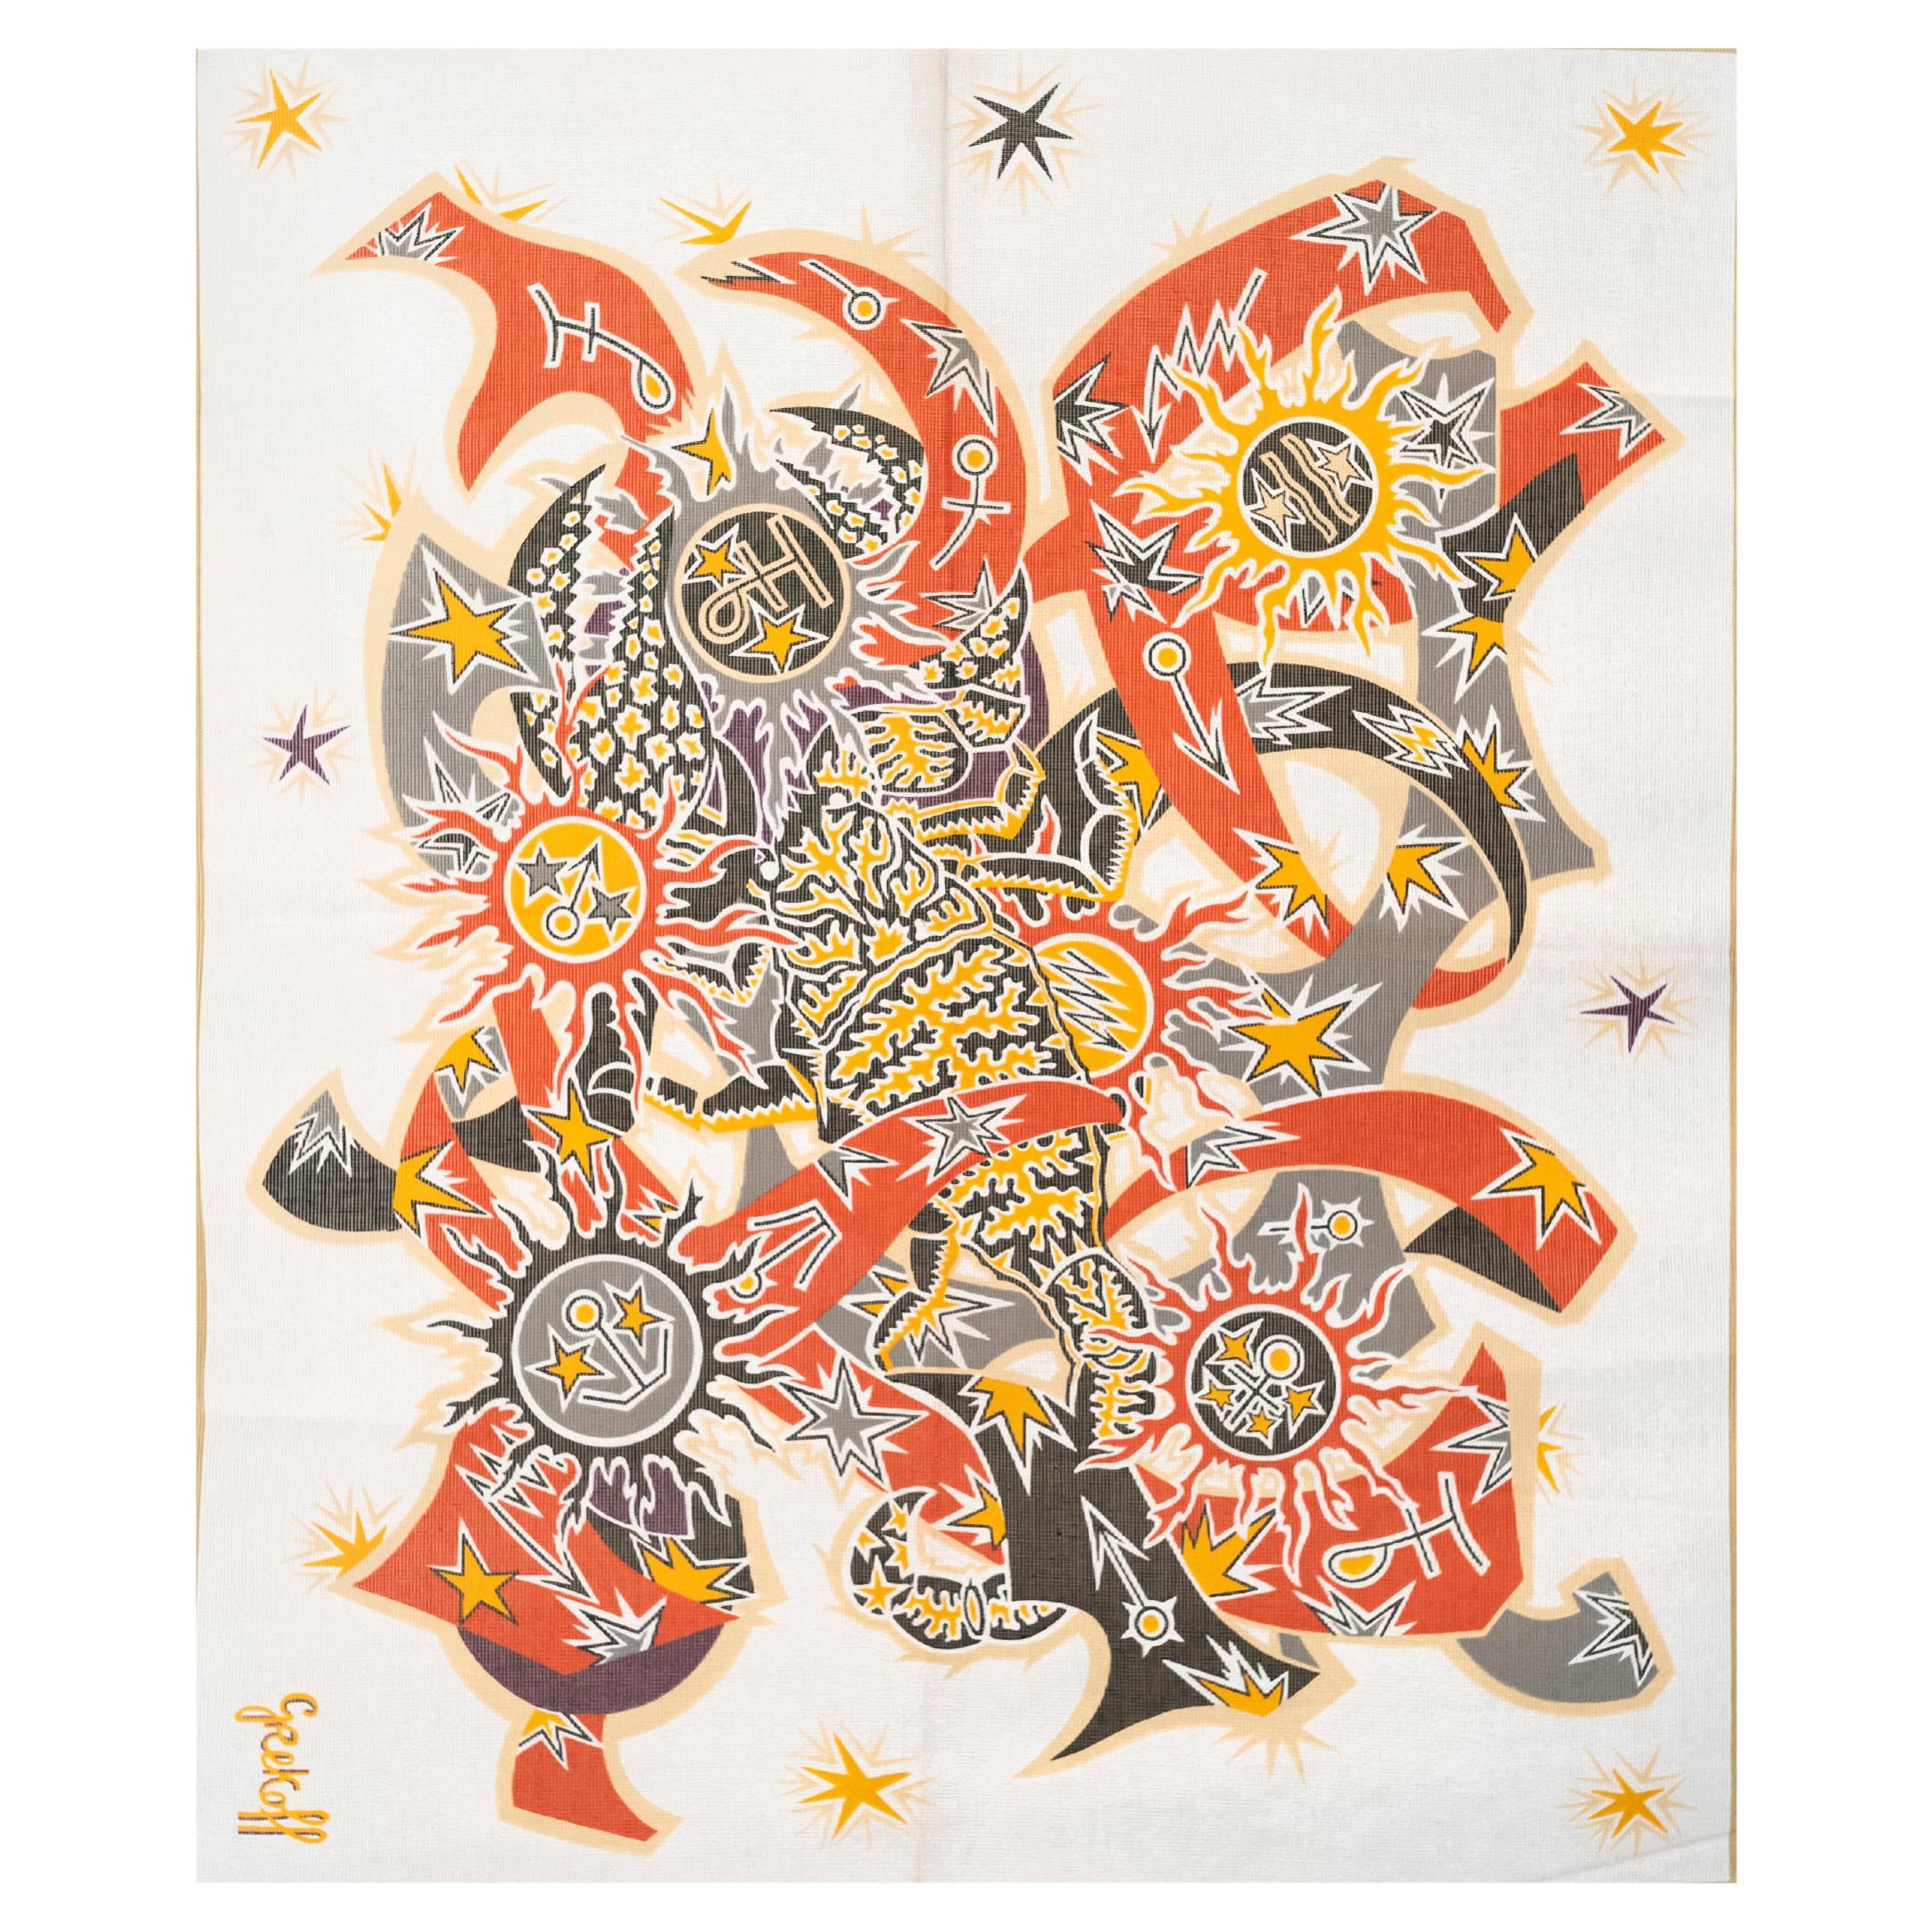 Framed Elie Grekoff Cartoon Tapestry "Le Scorpion"